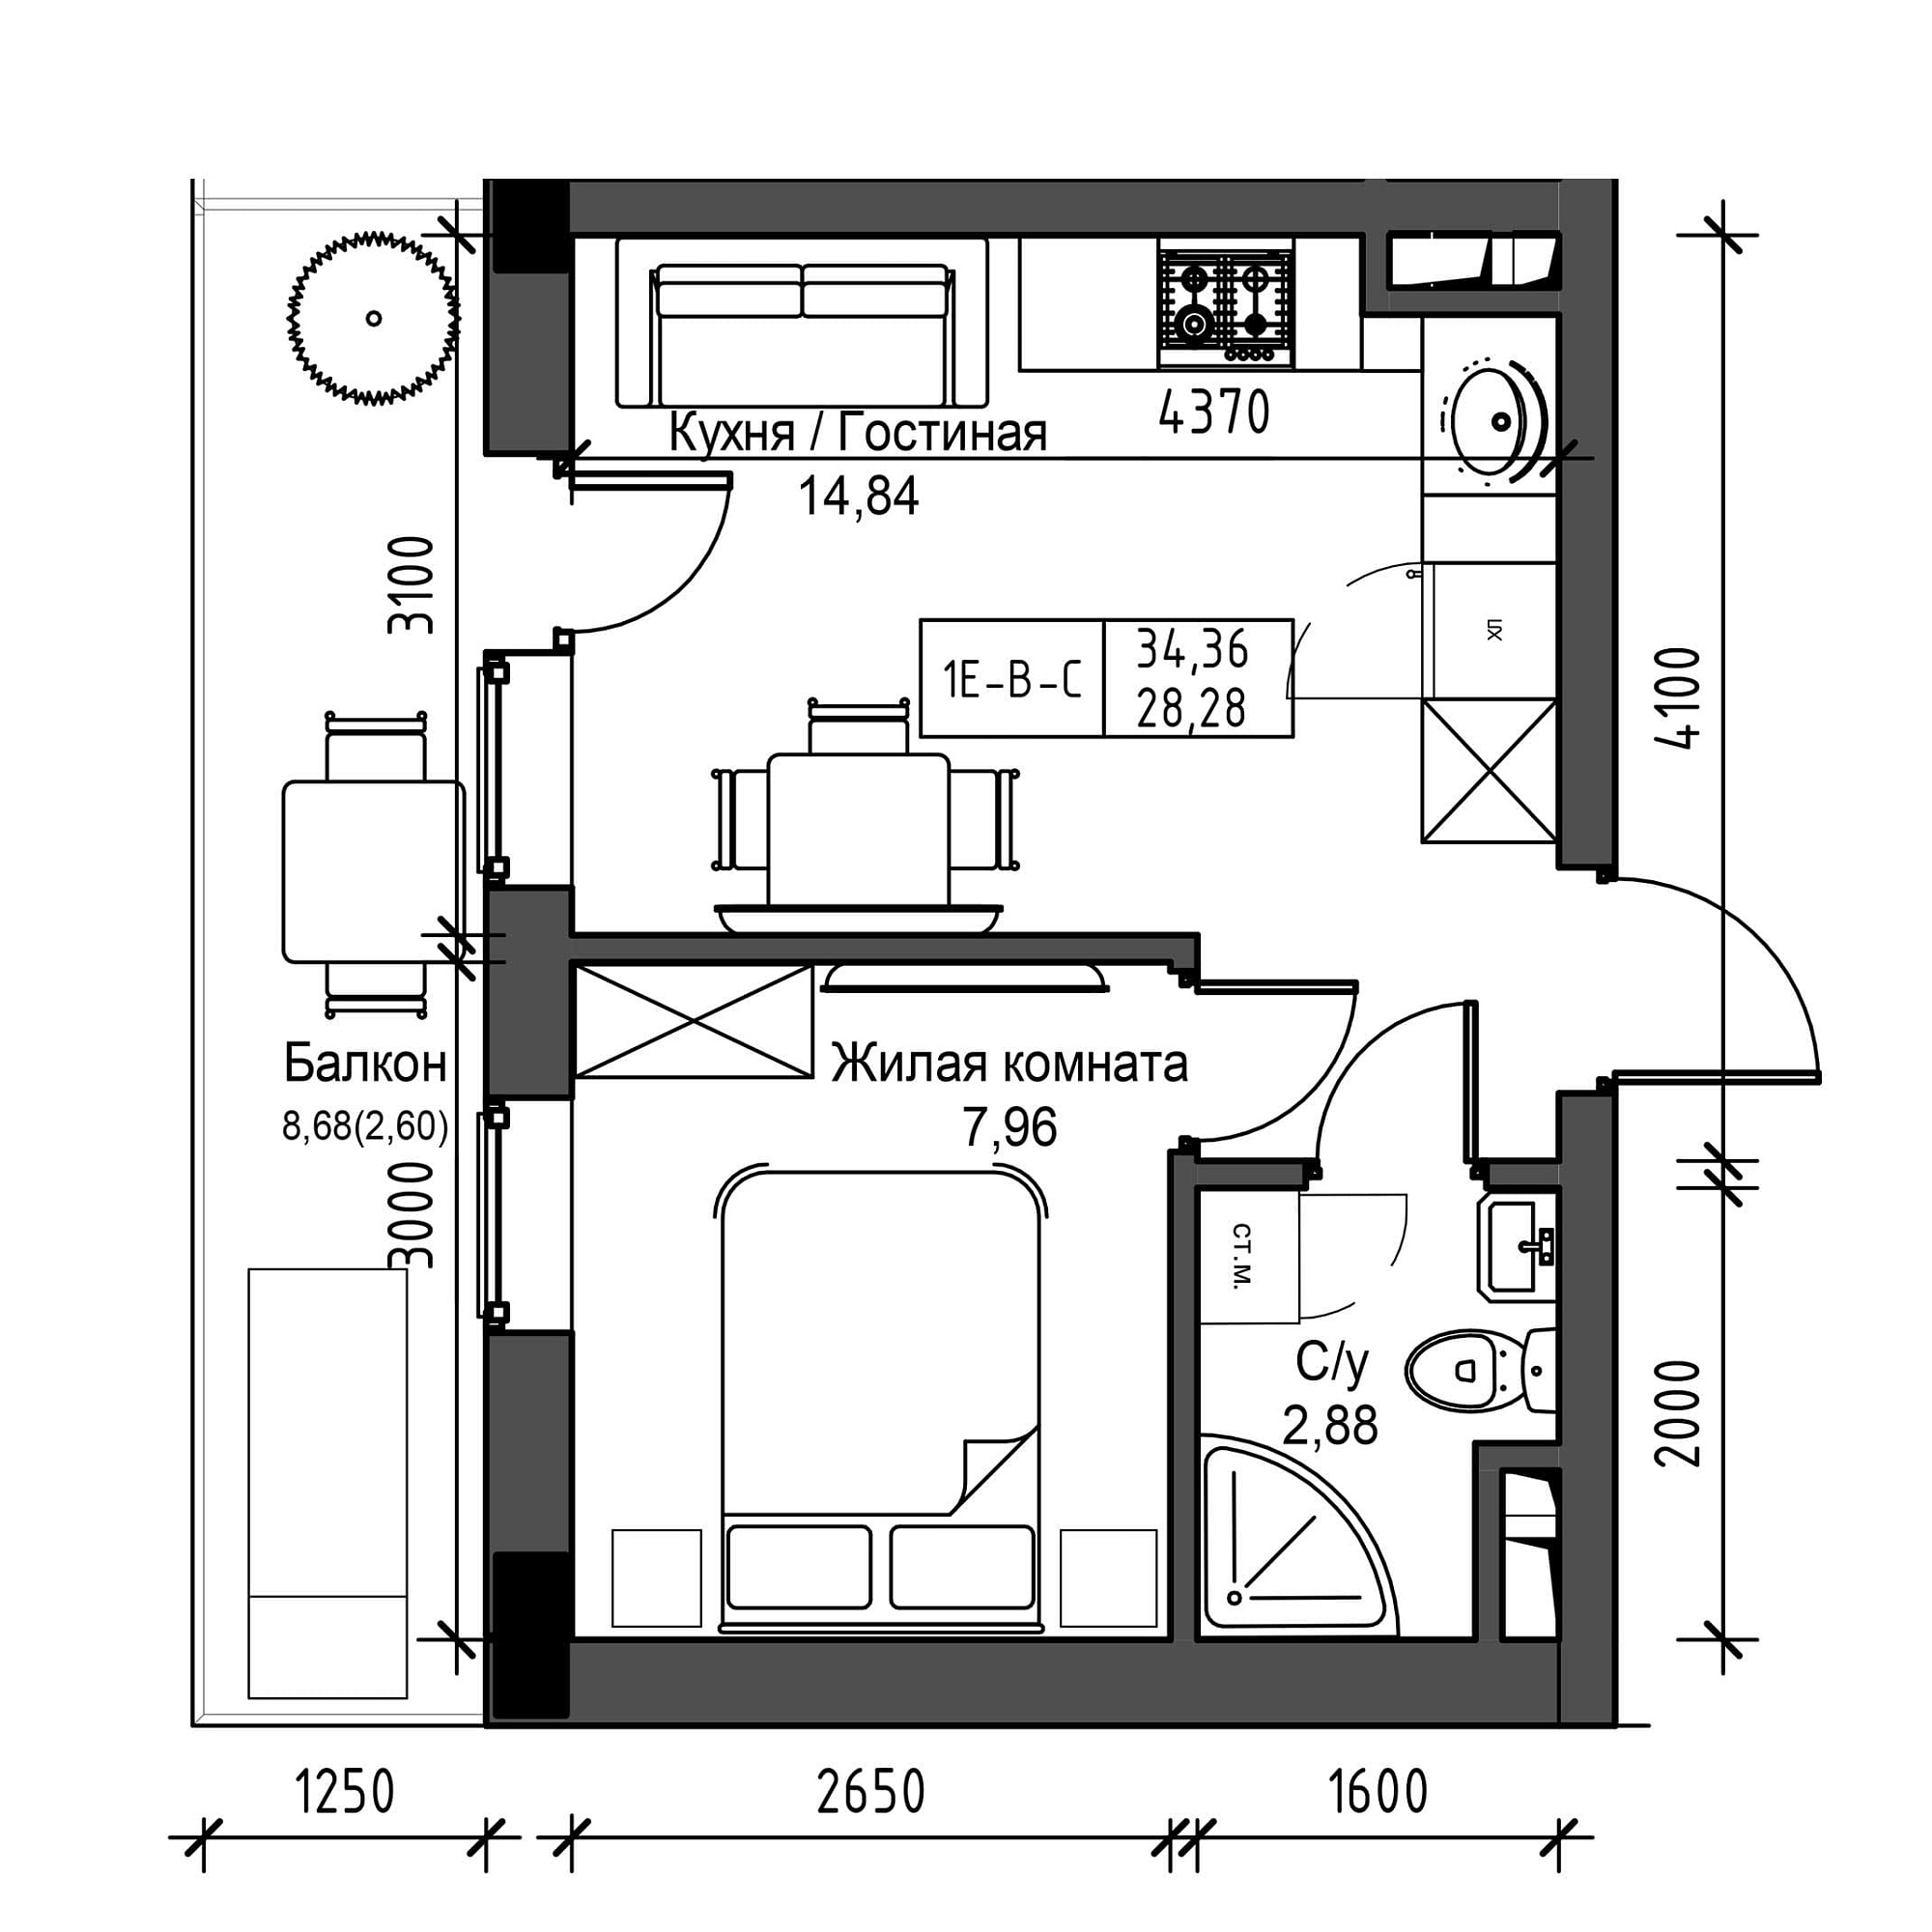 Планування 1-к квартира площею 28.28м2, UM-001-04/0014.